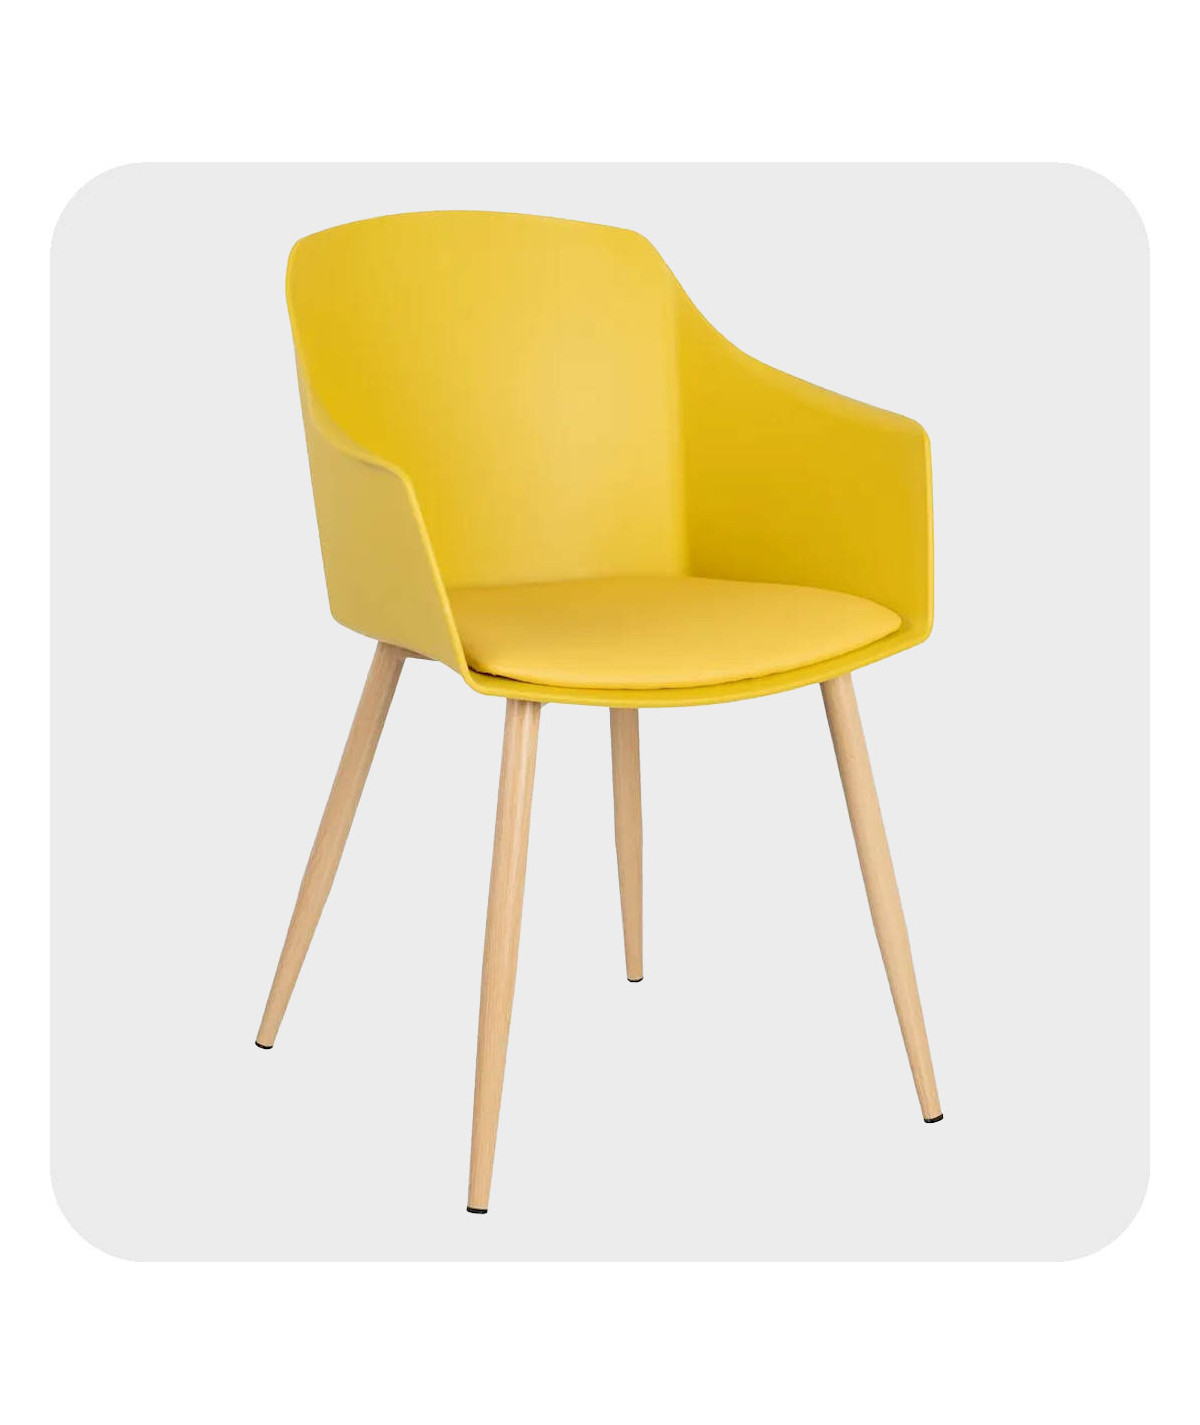 4 chaises jaune design avec coussin - Cumple - Yesdeko